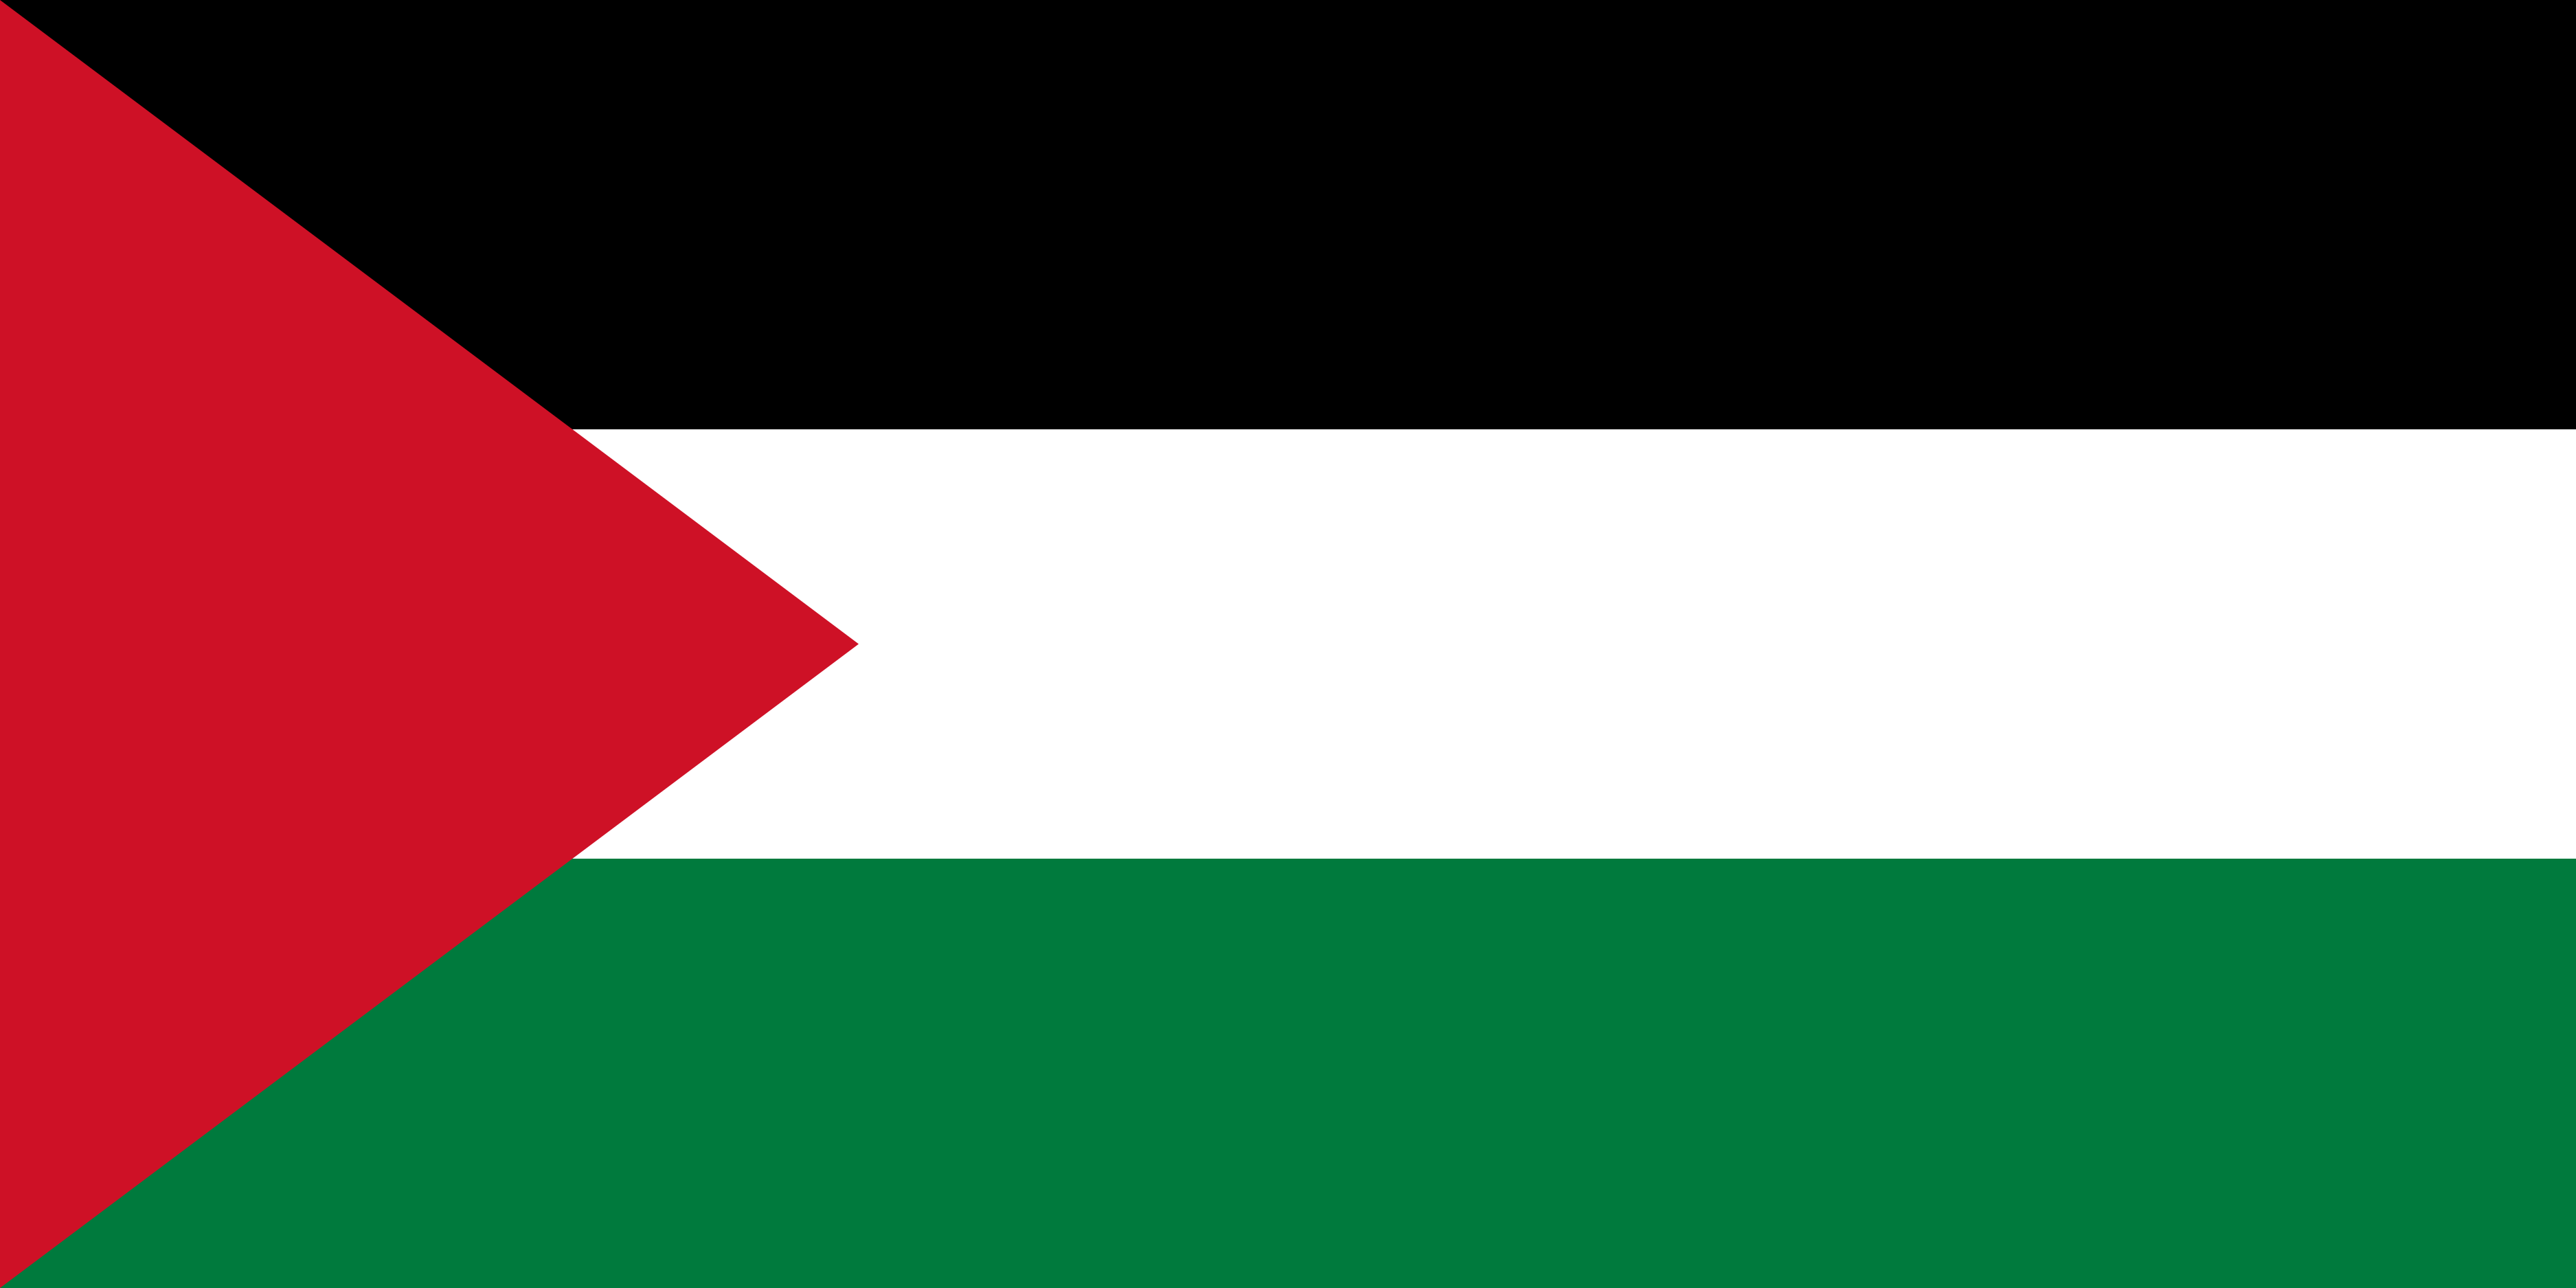 Free Palestine Flag Documents: PDF, DOC, DOCX, HTML & More!